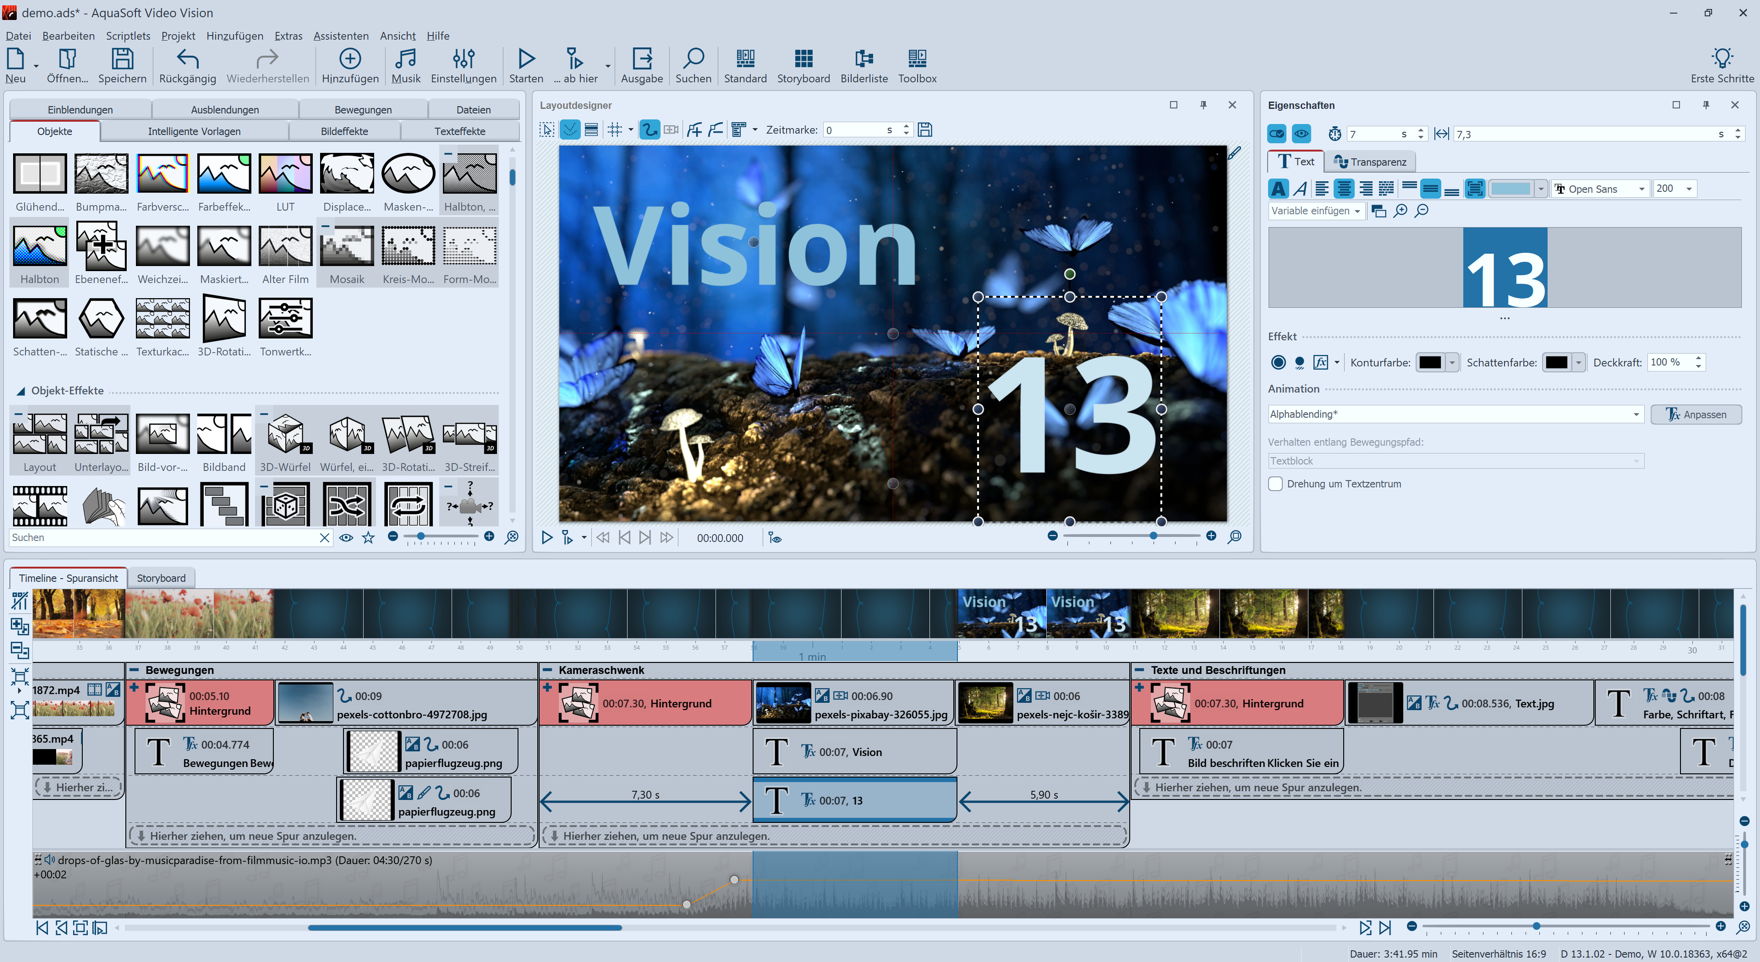 instal the new version for mac AquaSoft Photo Vision 14.2.13